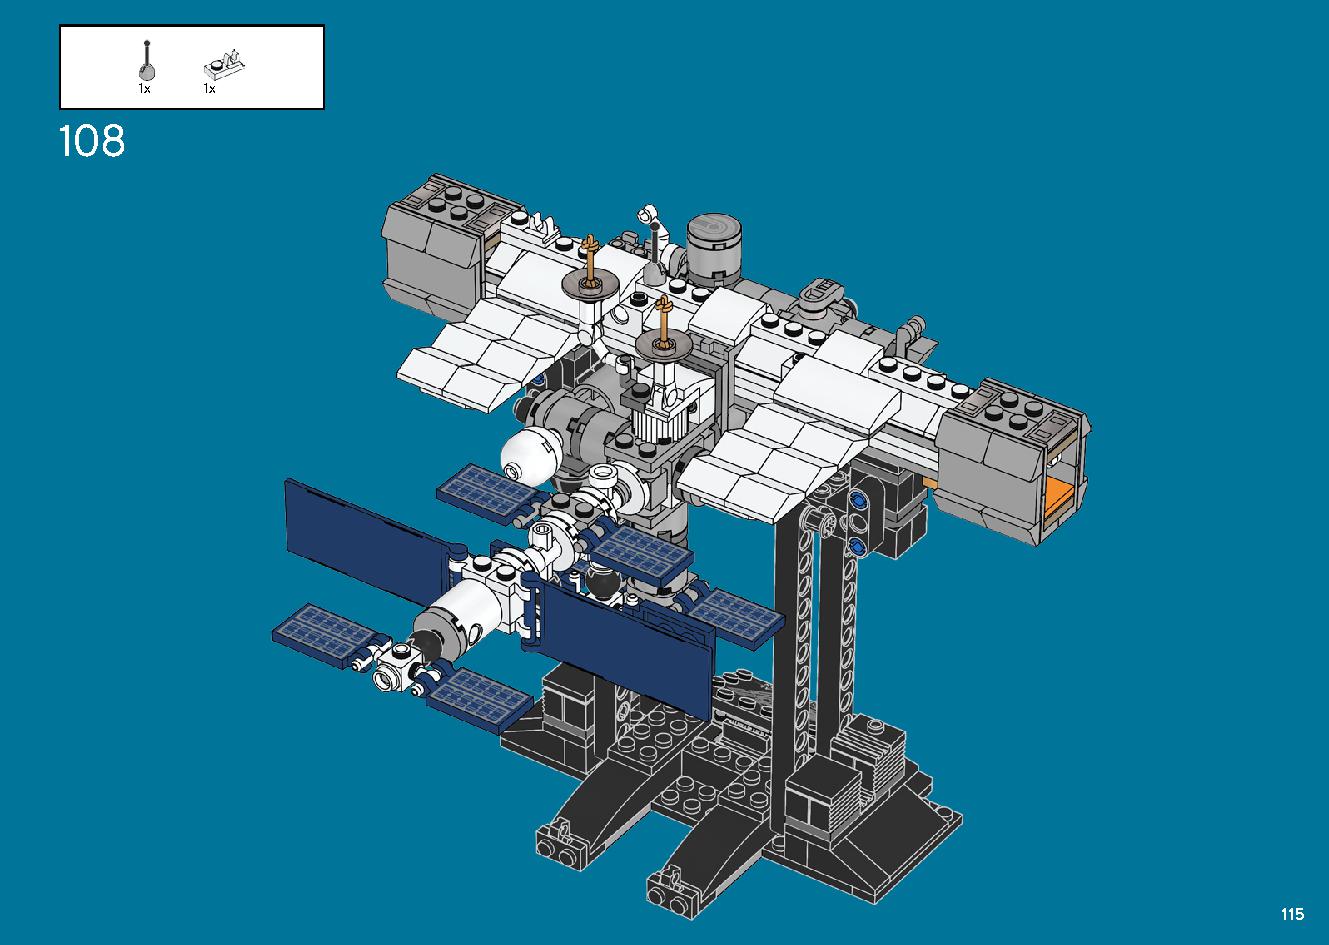 International Space Station 21321 レゴの商品情報 レゴの説明書・組立方法 115 page